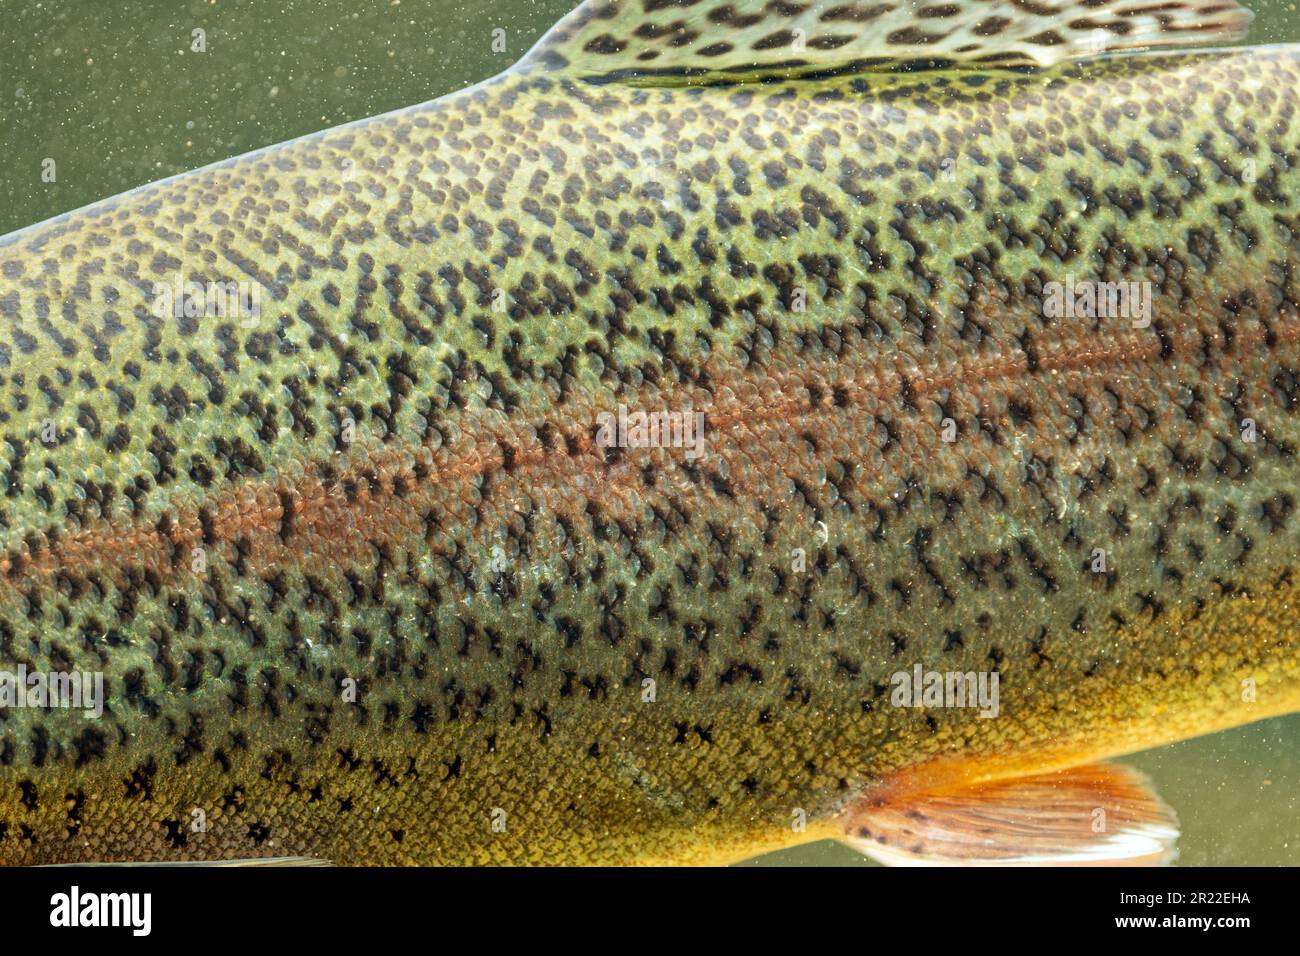 rainbow trout (Oncorhynchus mykiss, Salmo gairdneri), detail, Germany Stock Photo